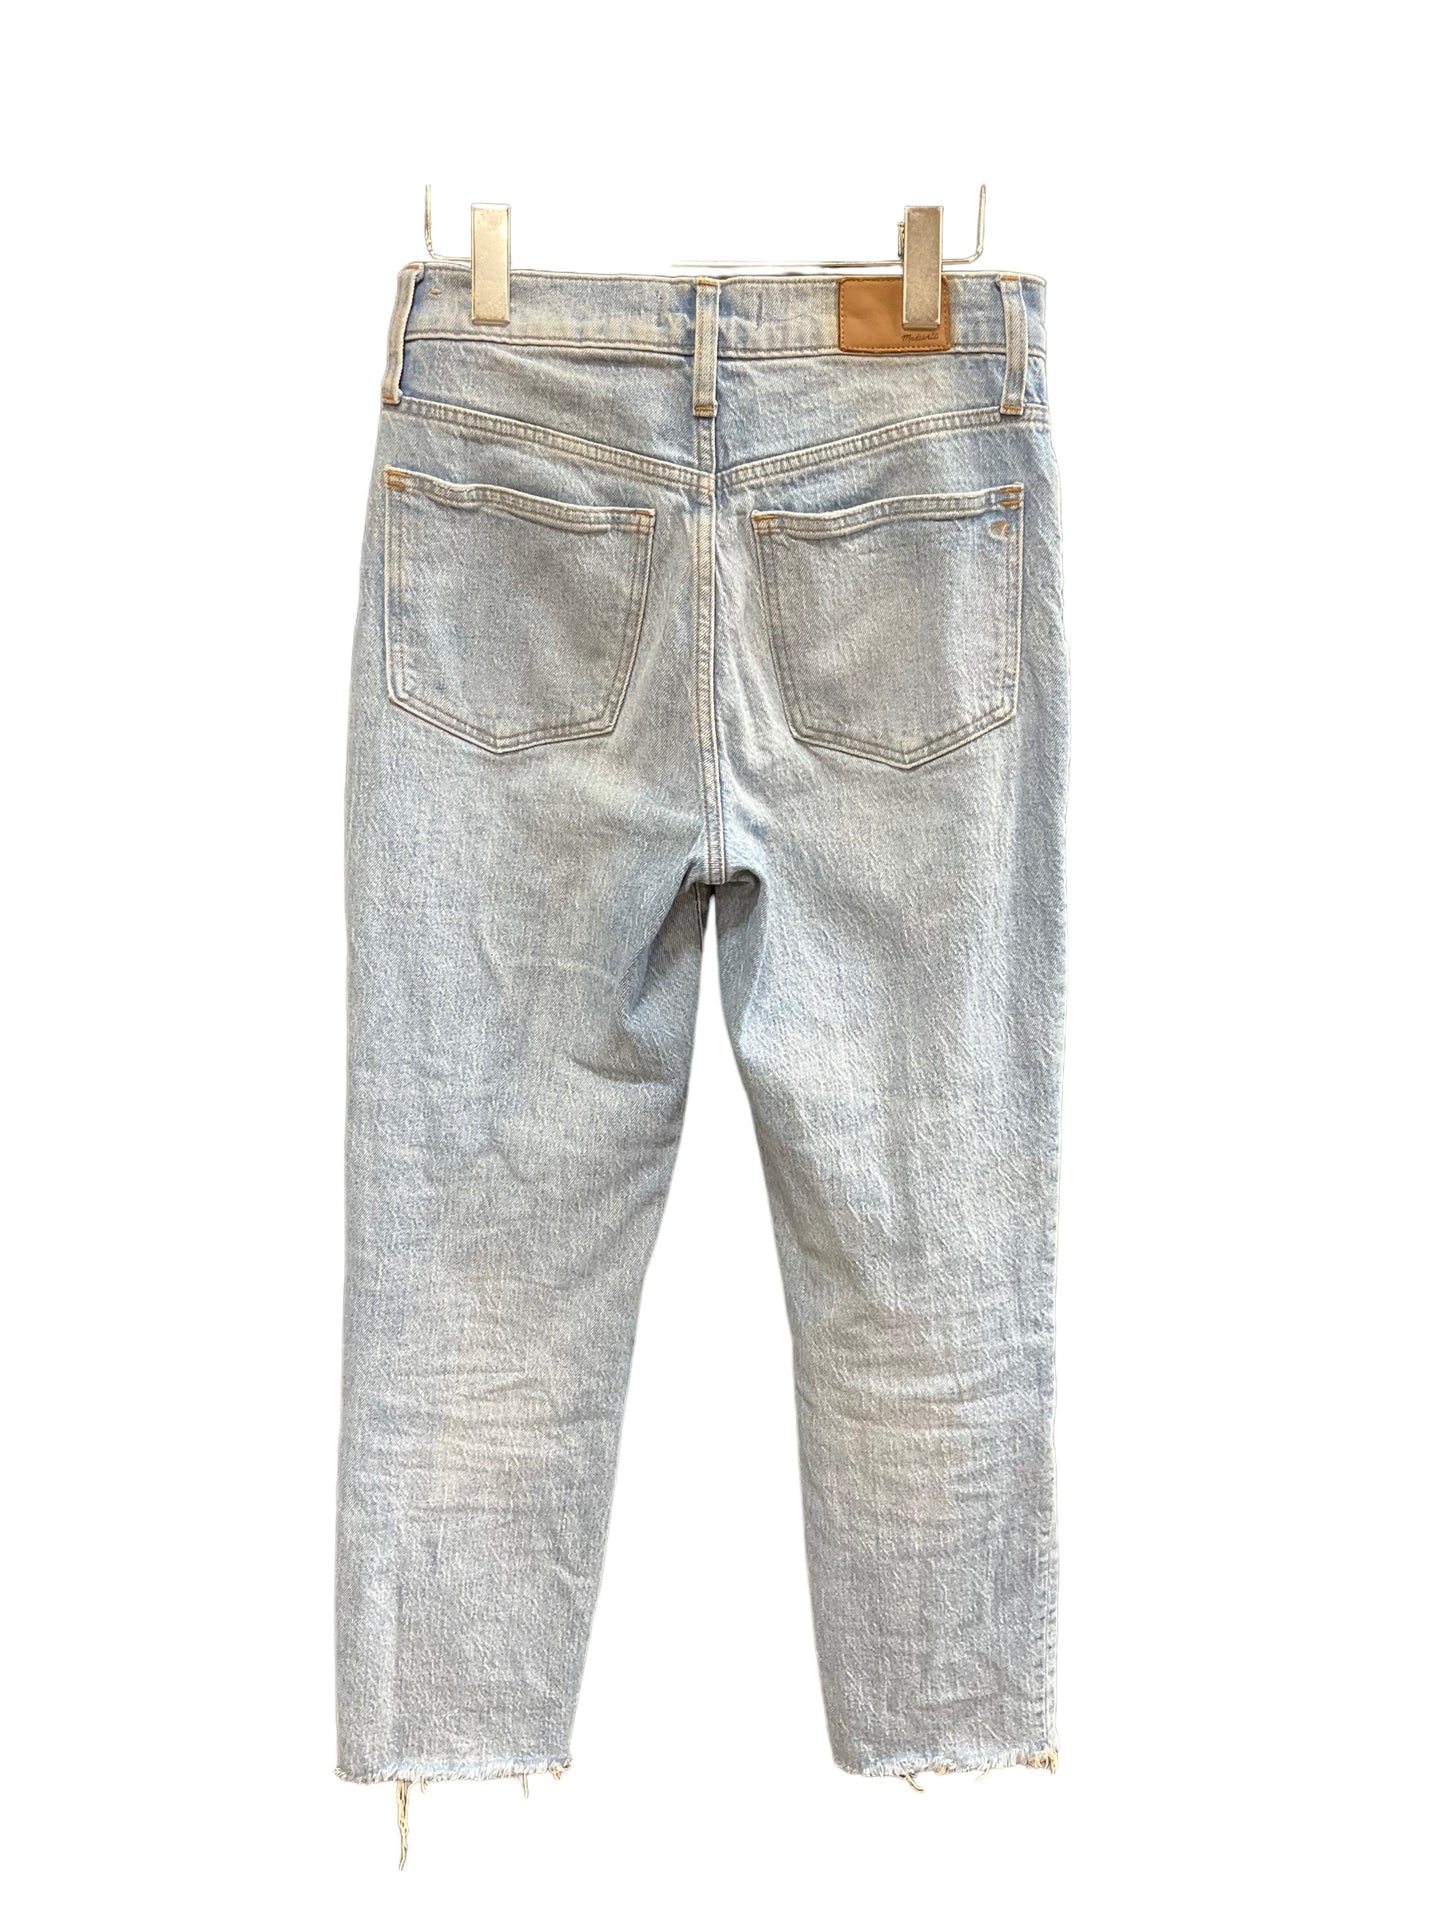 Jeans Boyfriend By Madewell  Size: 4